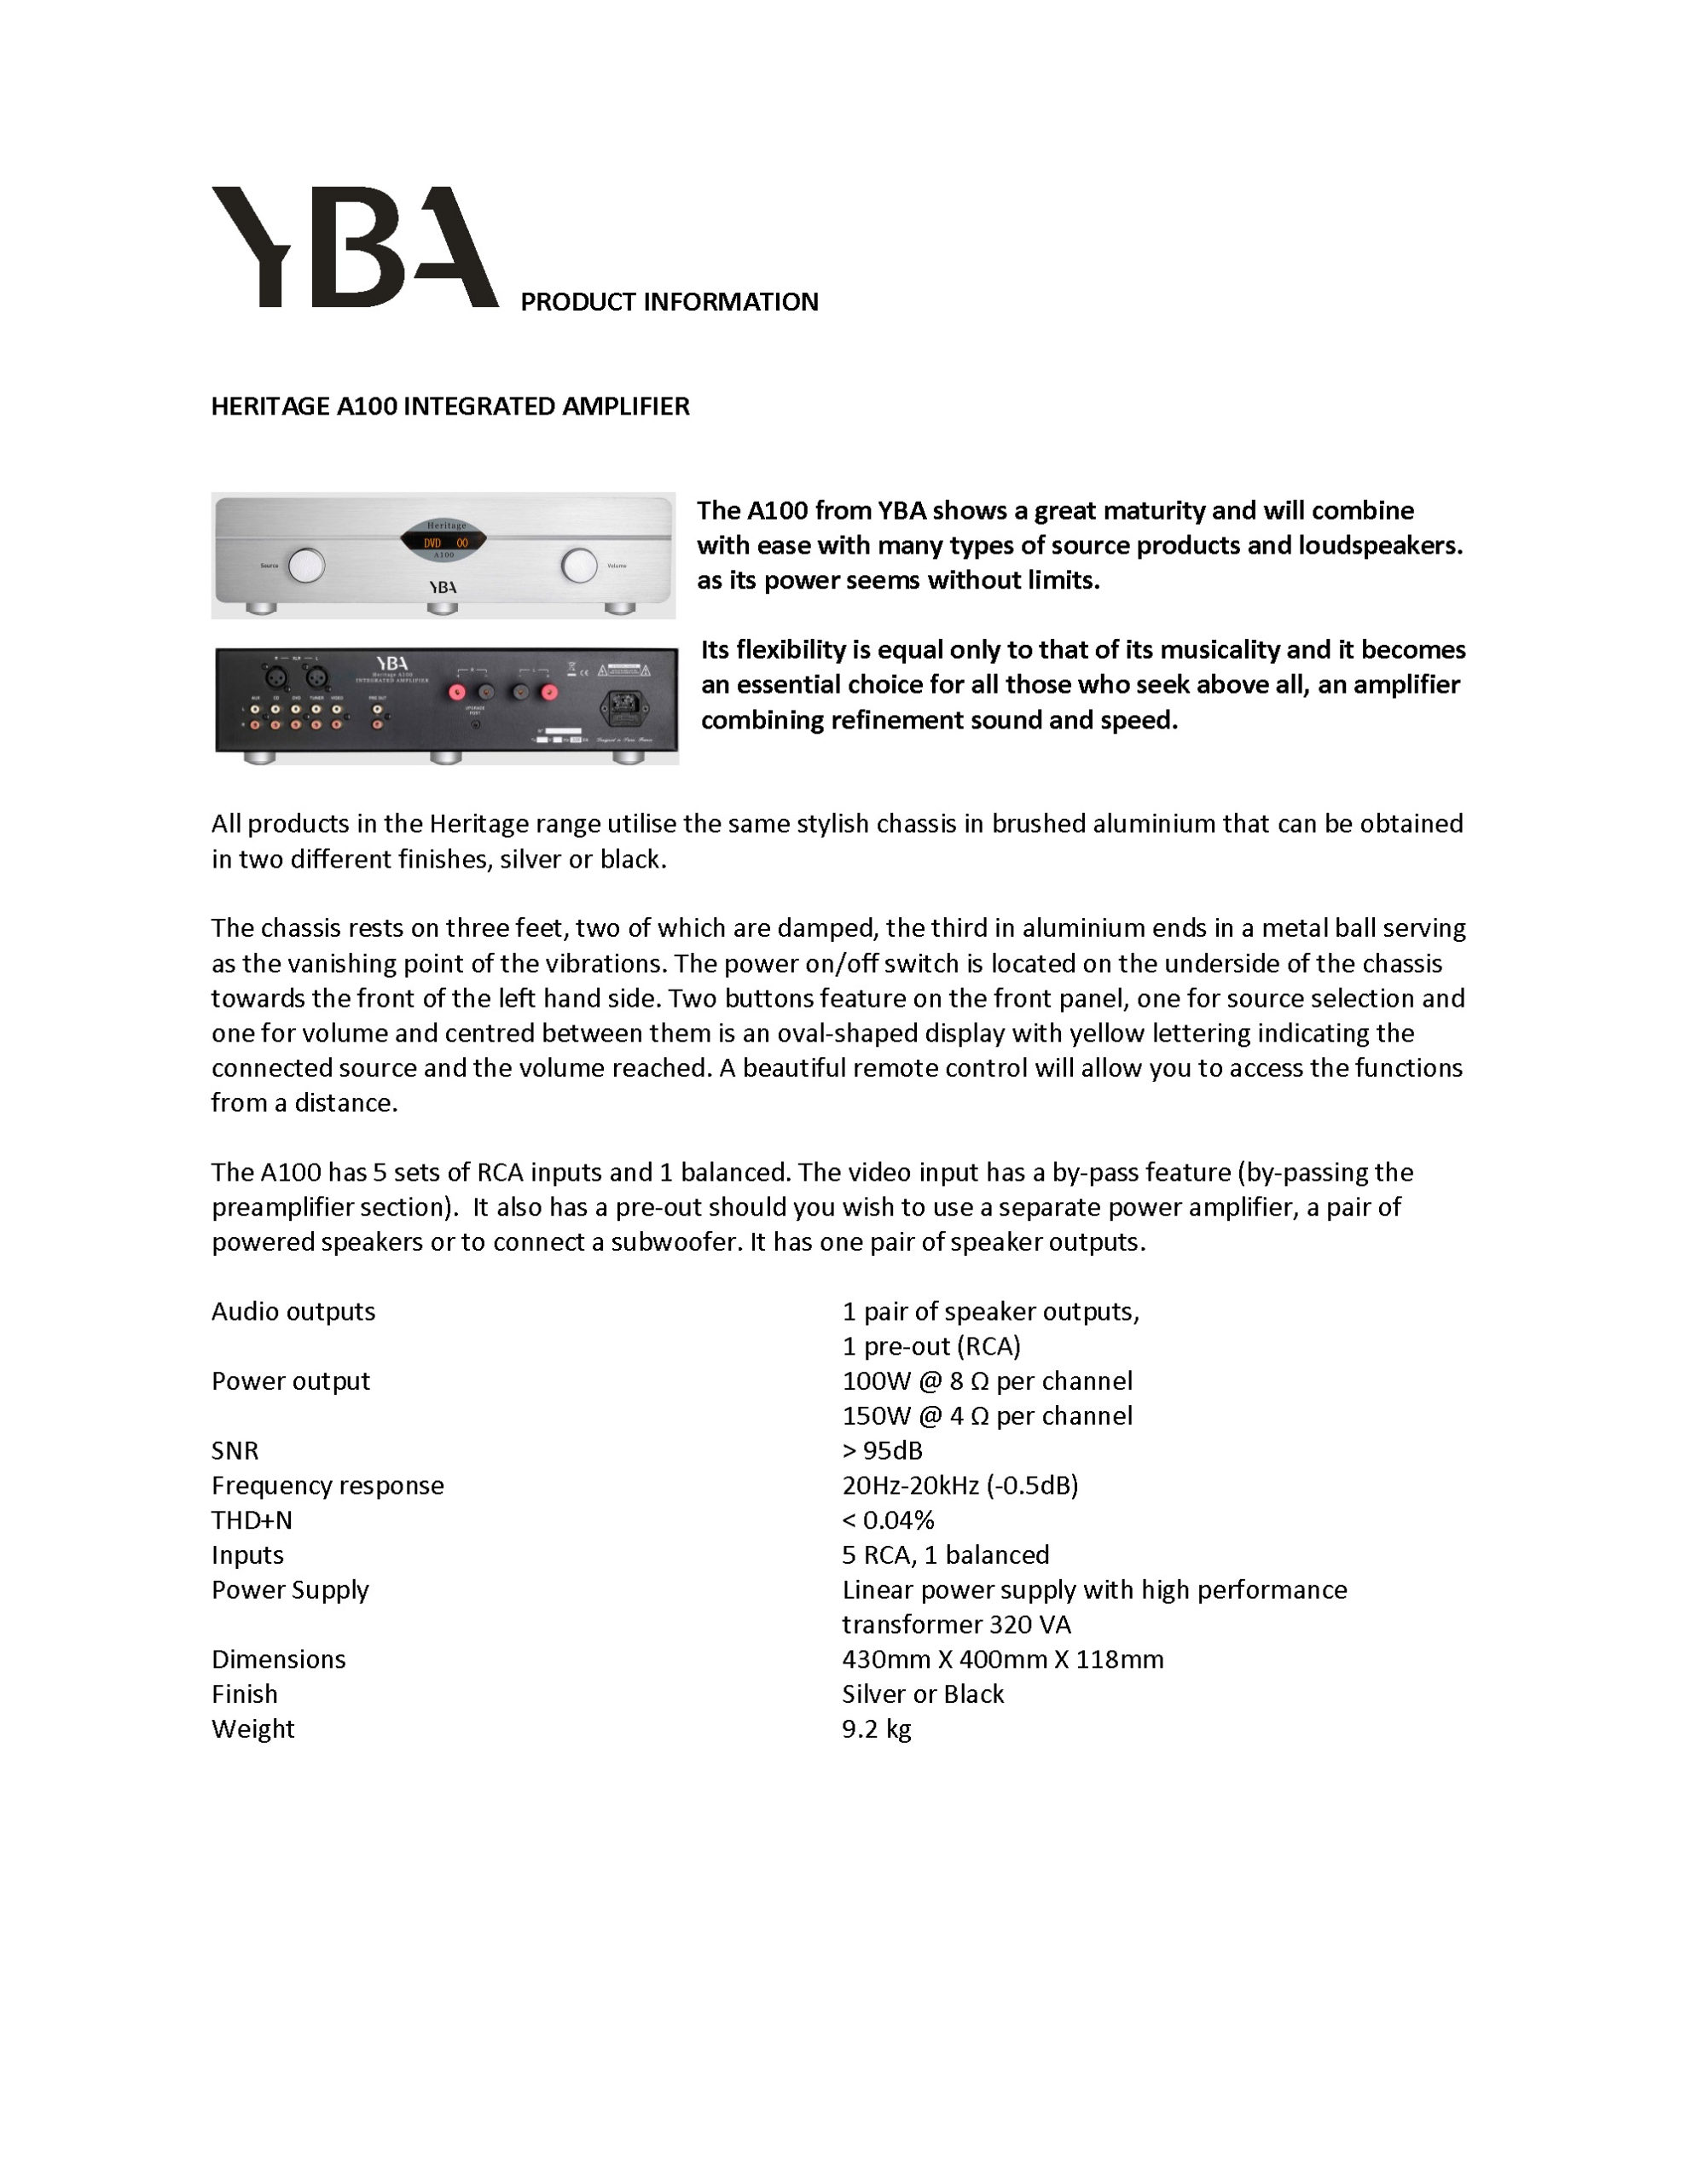 YBA Heritage A100 Info Sheet - Norman Audio